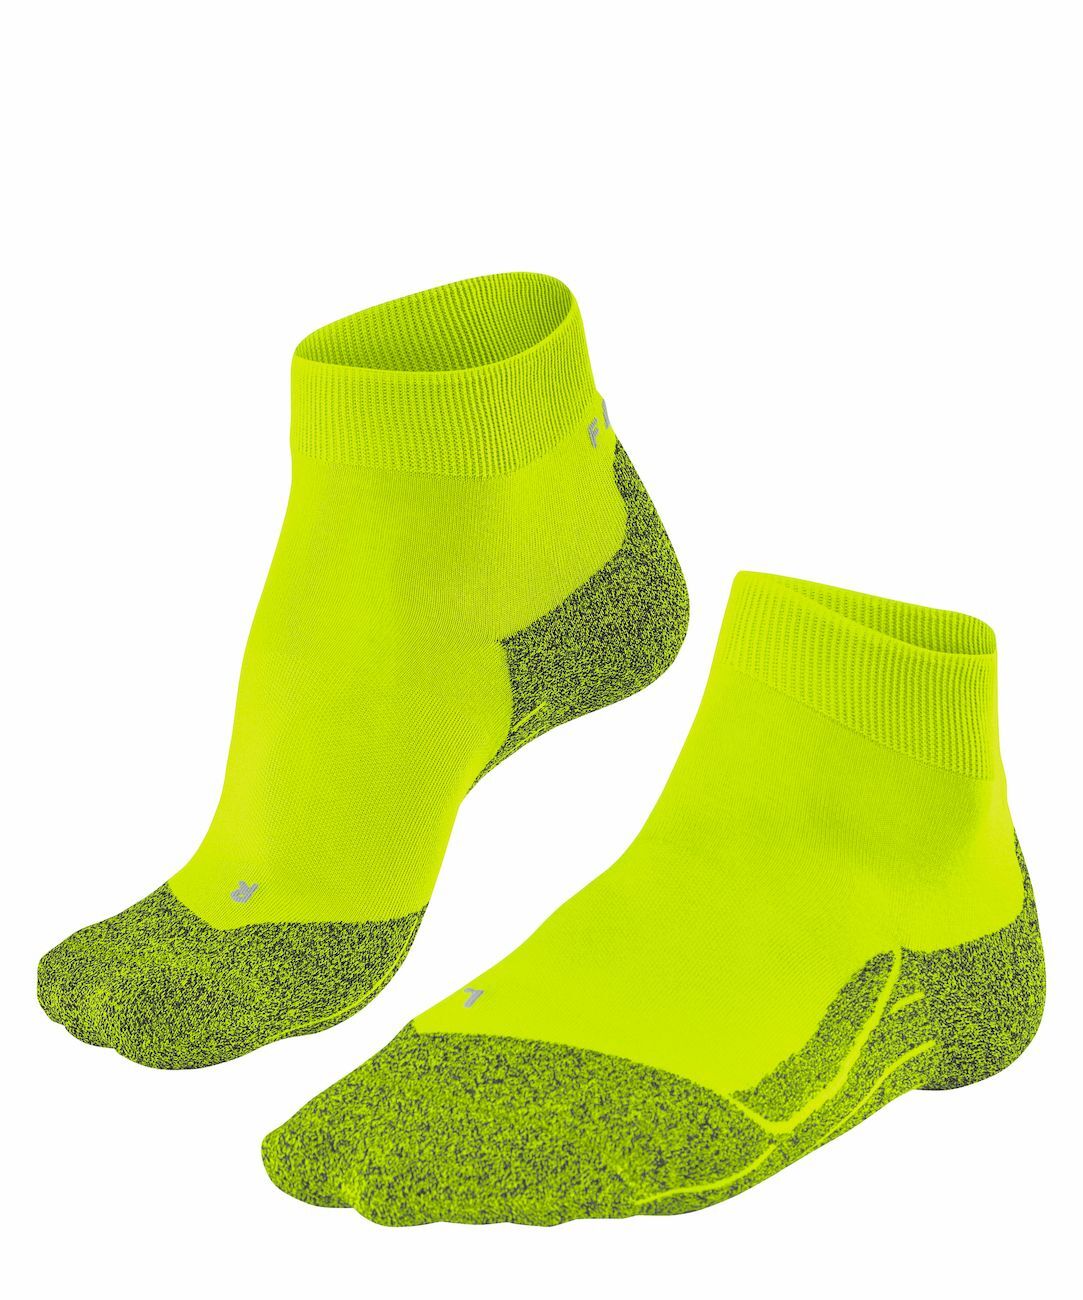 Falke RU4 Light Short - Running socks - Men's